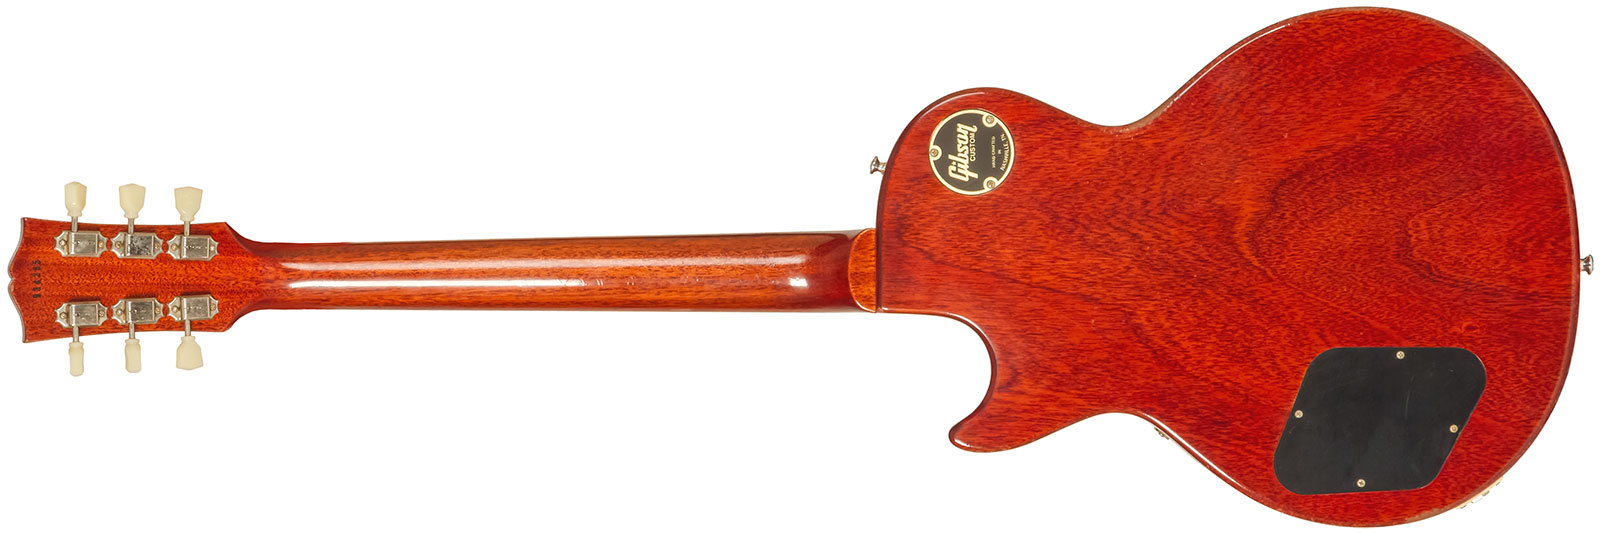 Gibson Custom Shop M2m Les Paul Standard 1959 Reissue 2h Ht Rw #934285 - Murphy Lab Light Aged Ice Tea Burst - Enkel gesneden elektrische gitaar - Var